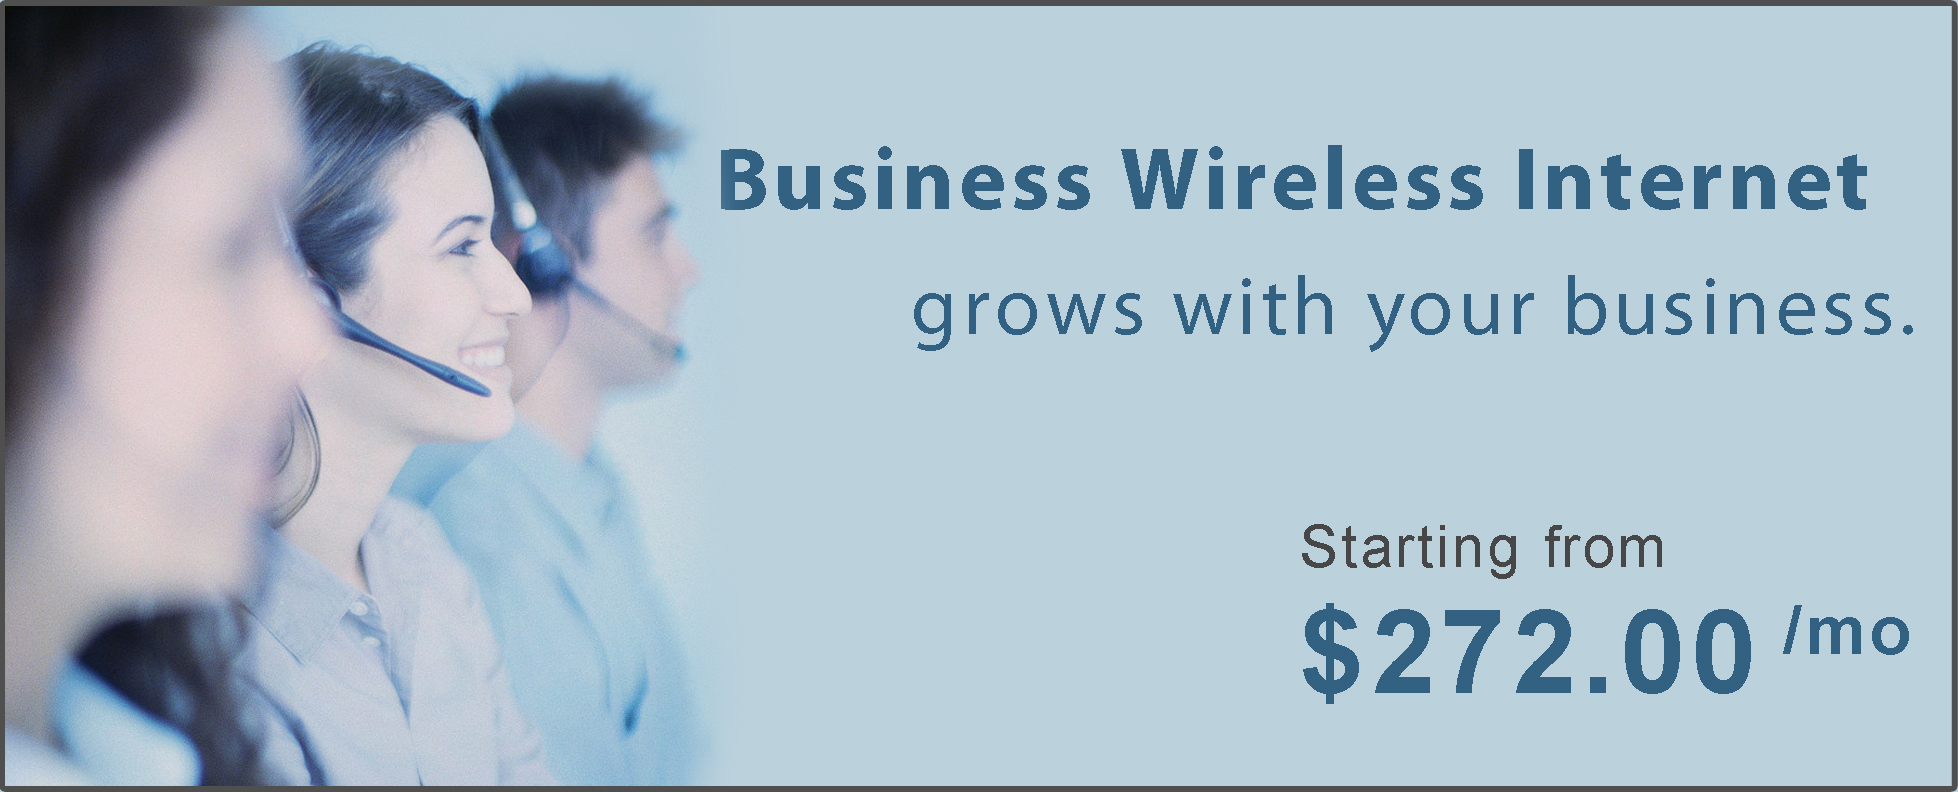 Business Wireless Internet Banner